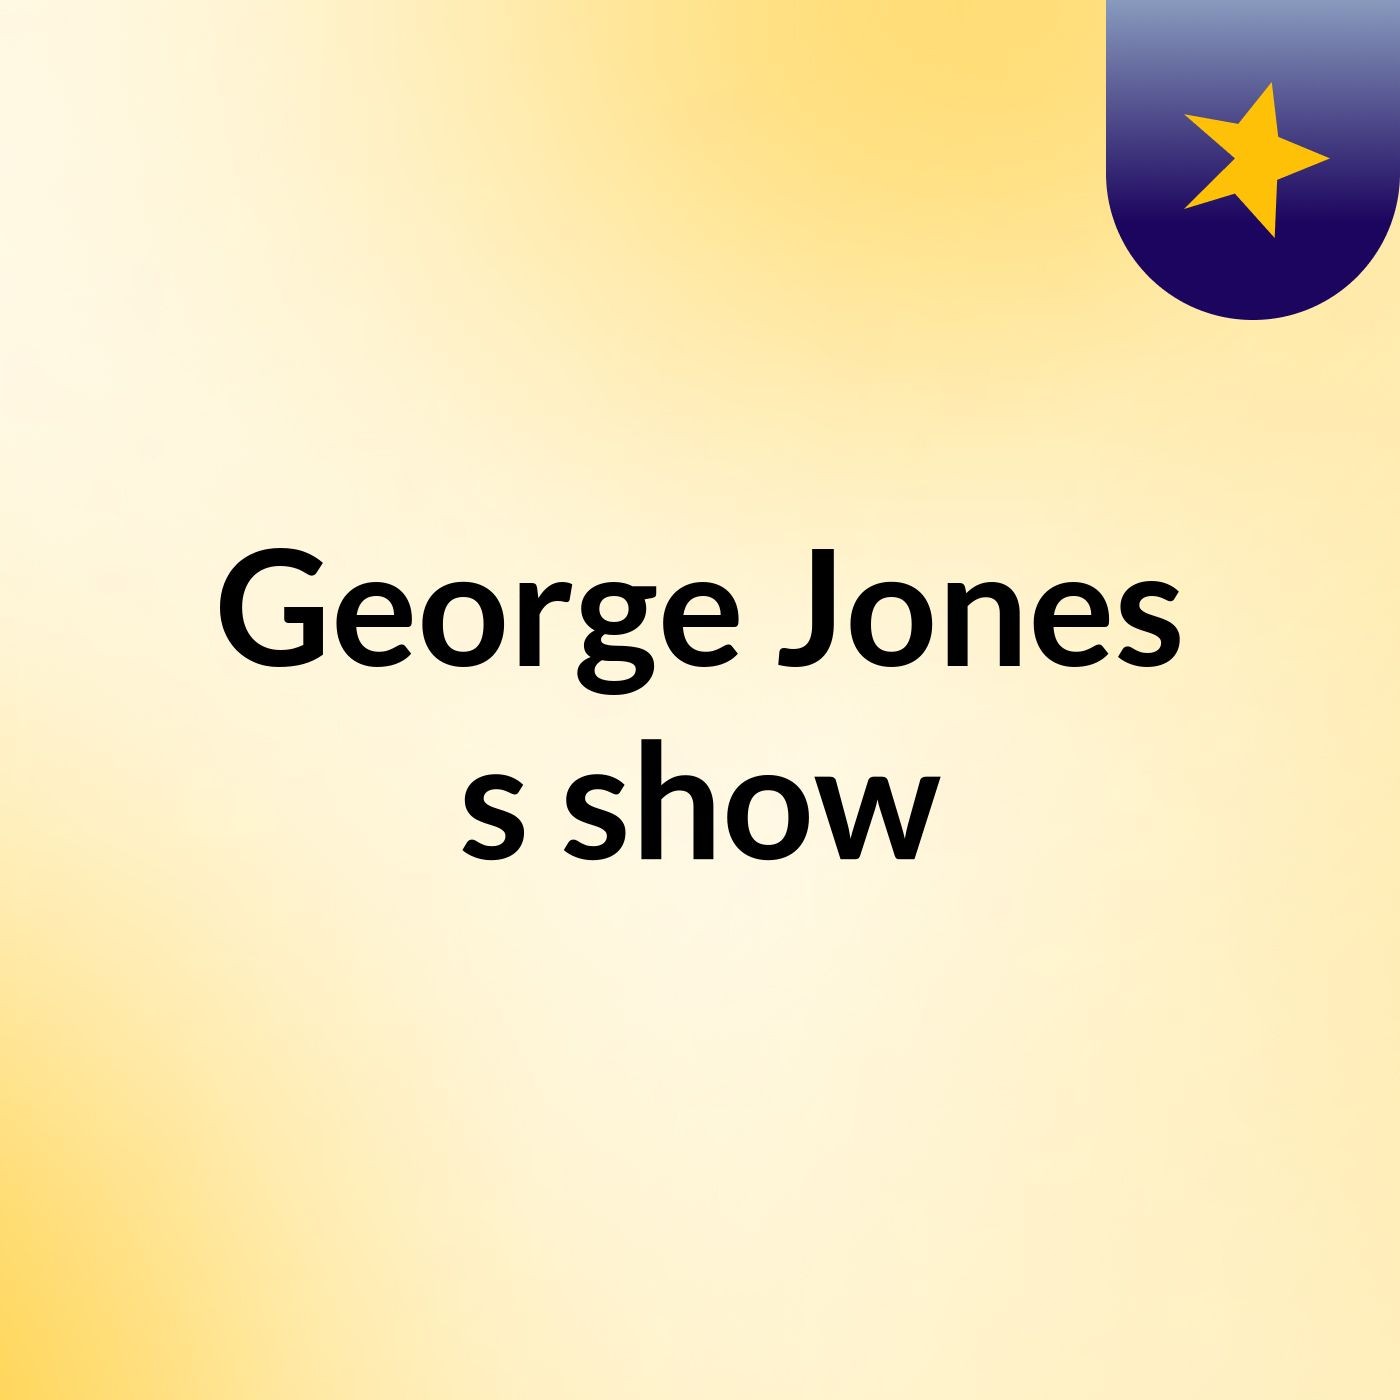 George Jones's show